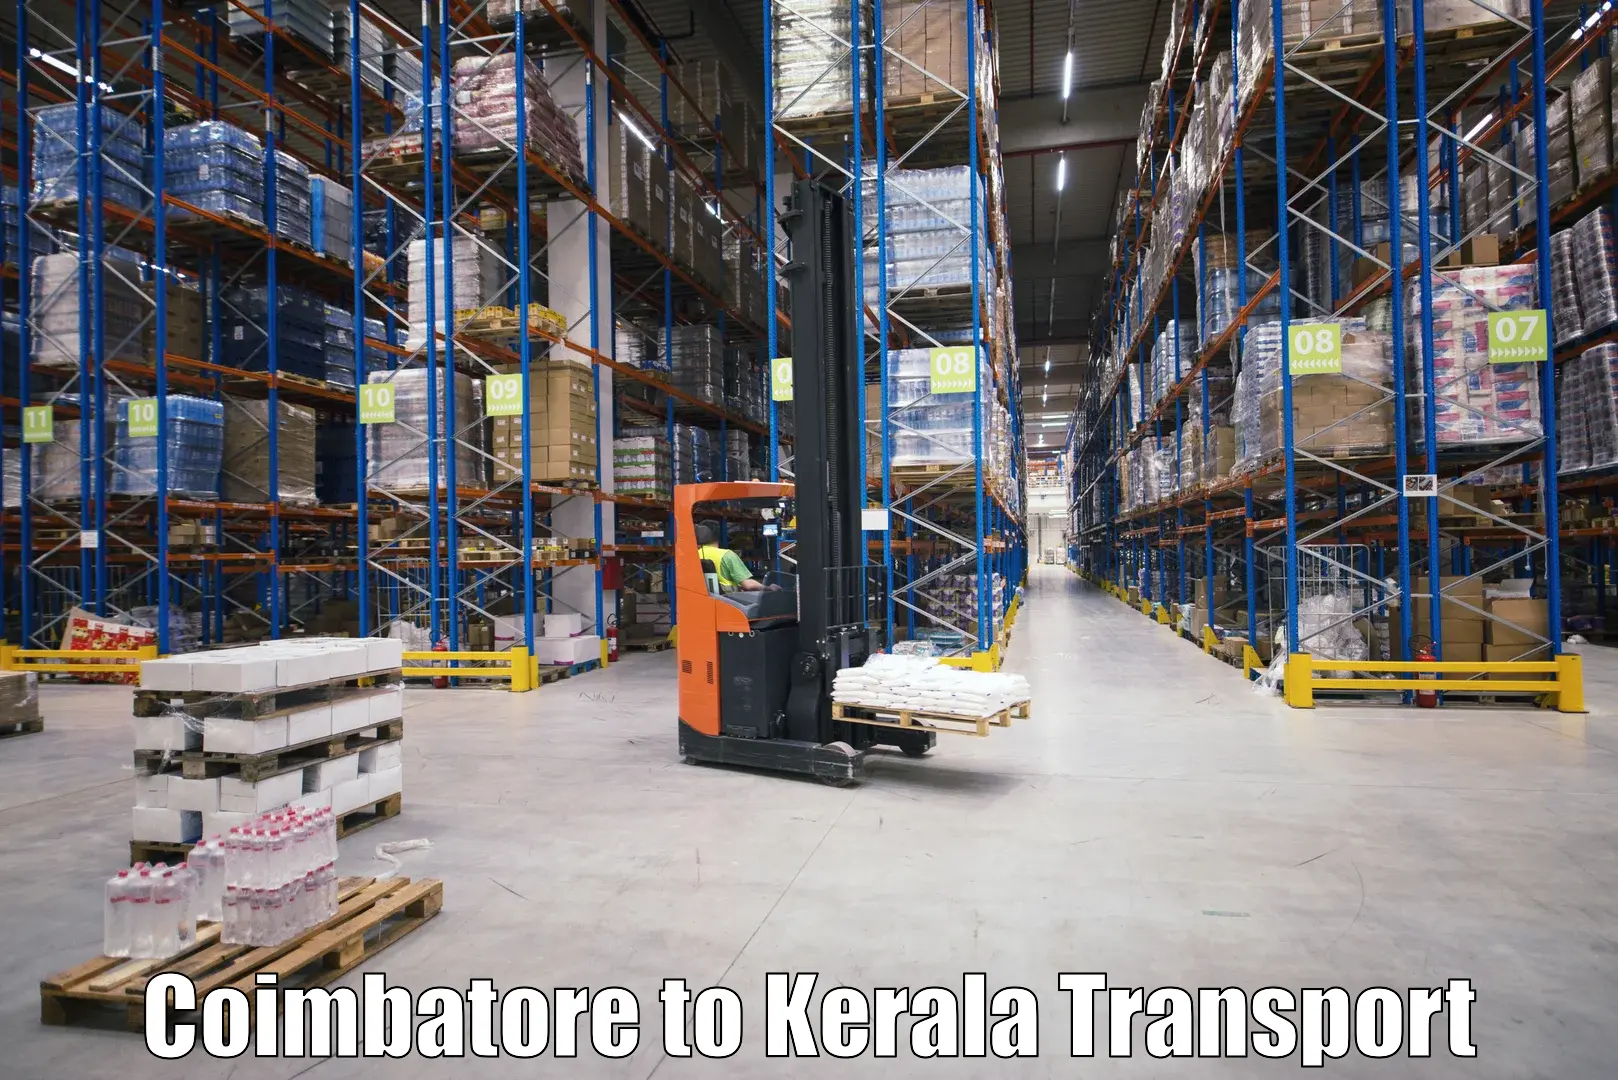 Delivery service Coimbatore to Trivandrum